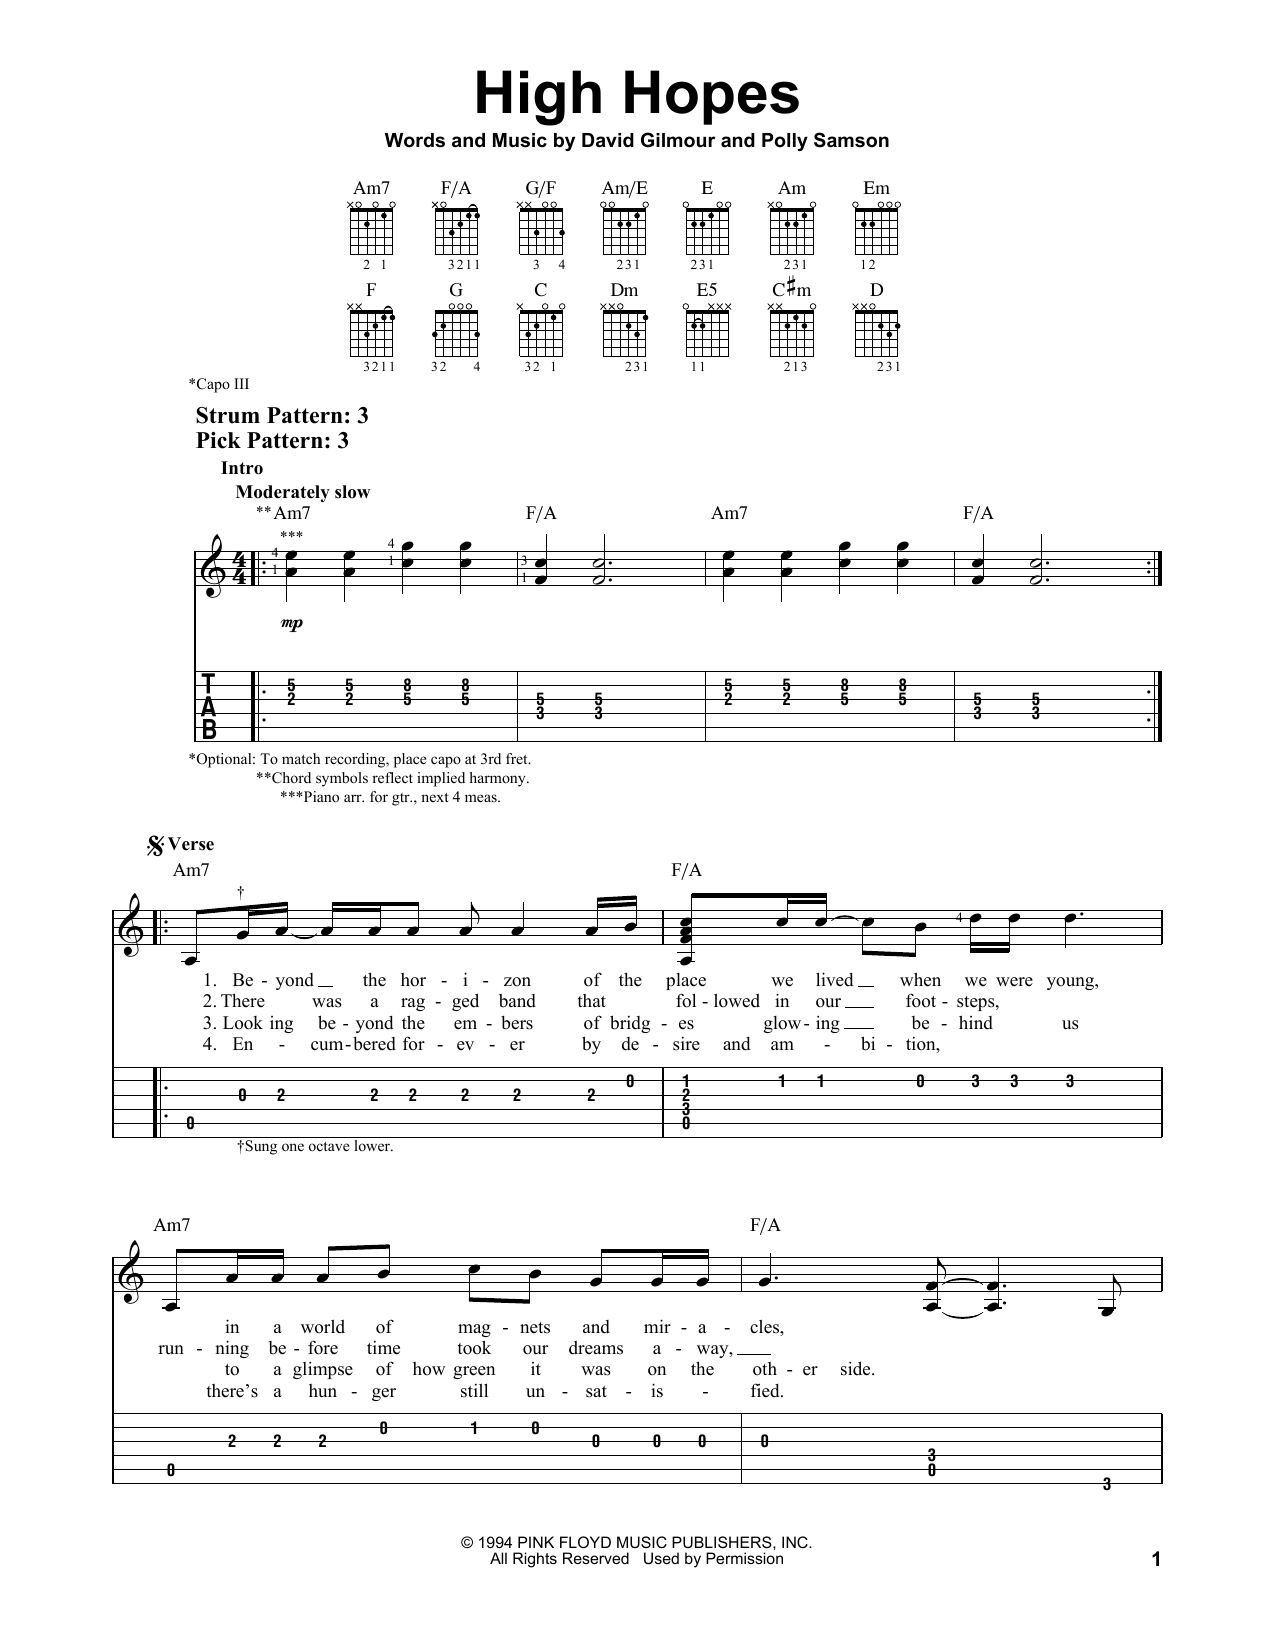 Pink Floyd High Hopes Sheet Music Notes & Chords for Ukulele - Download or Print PDF